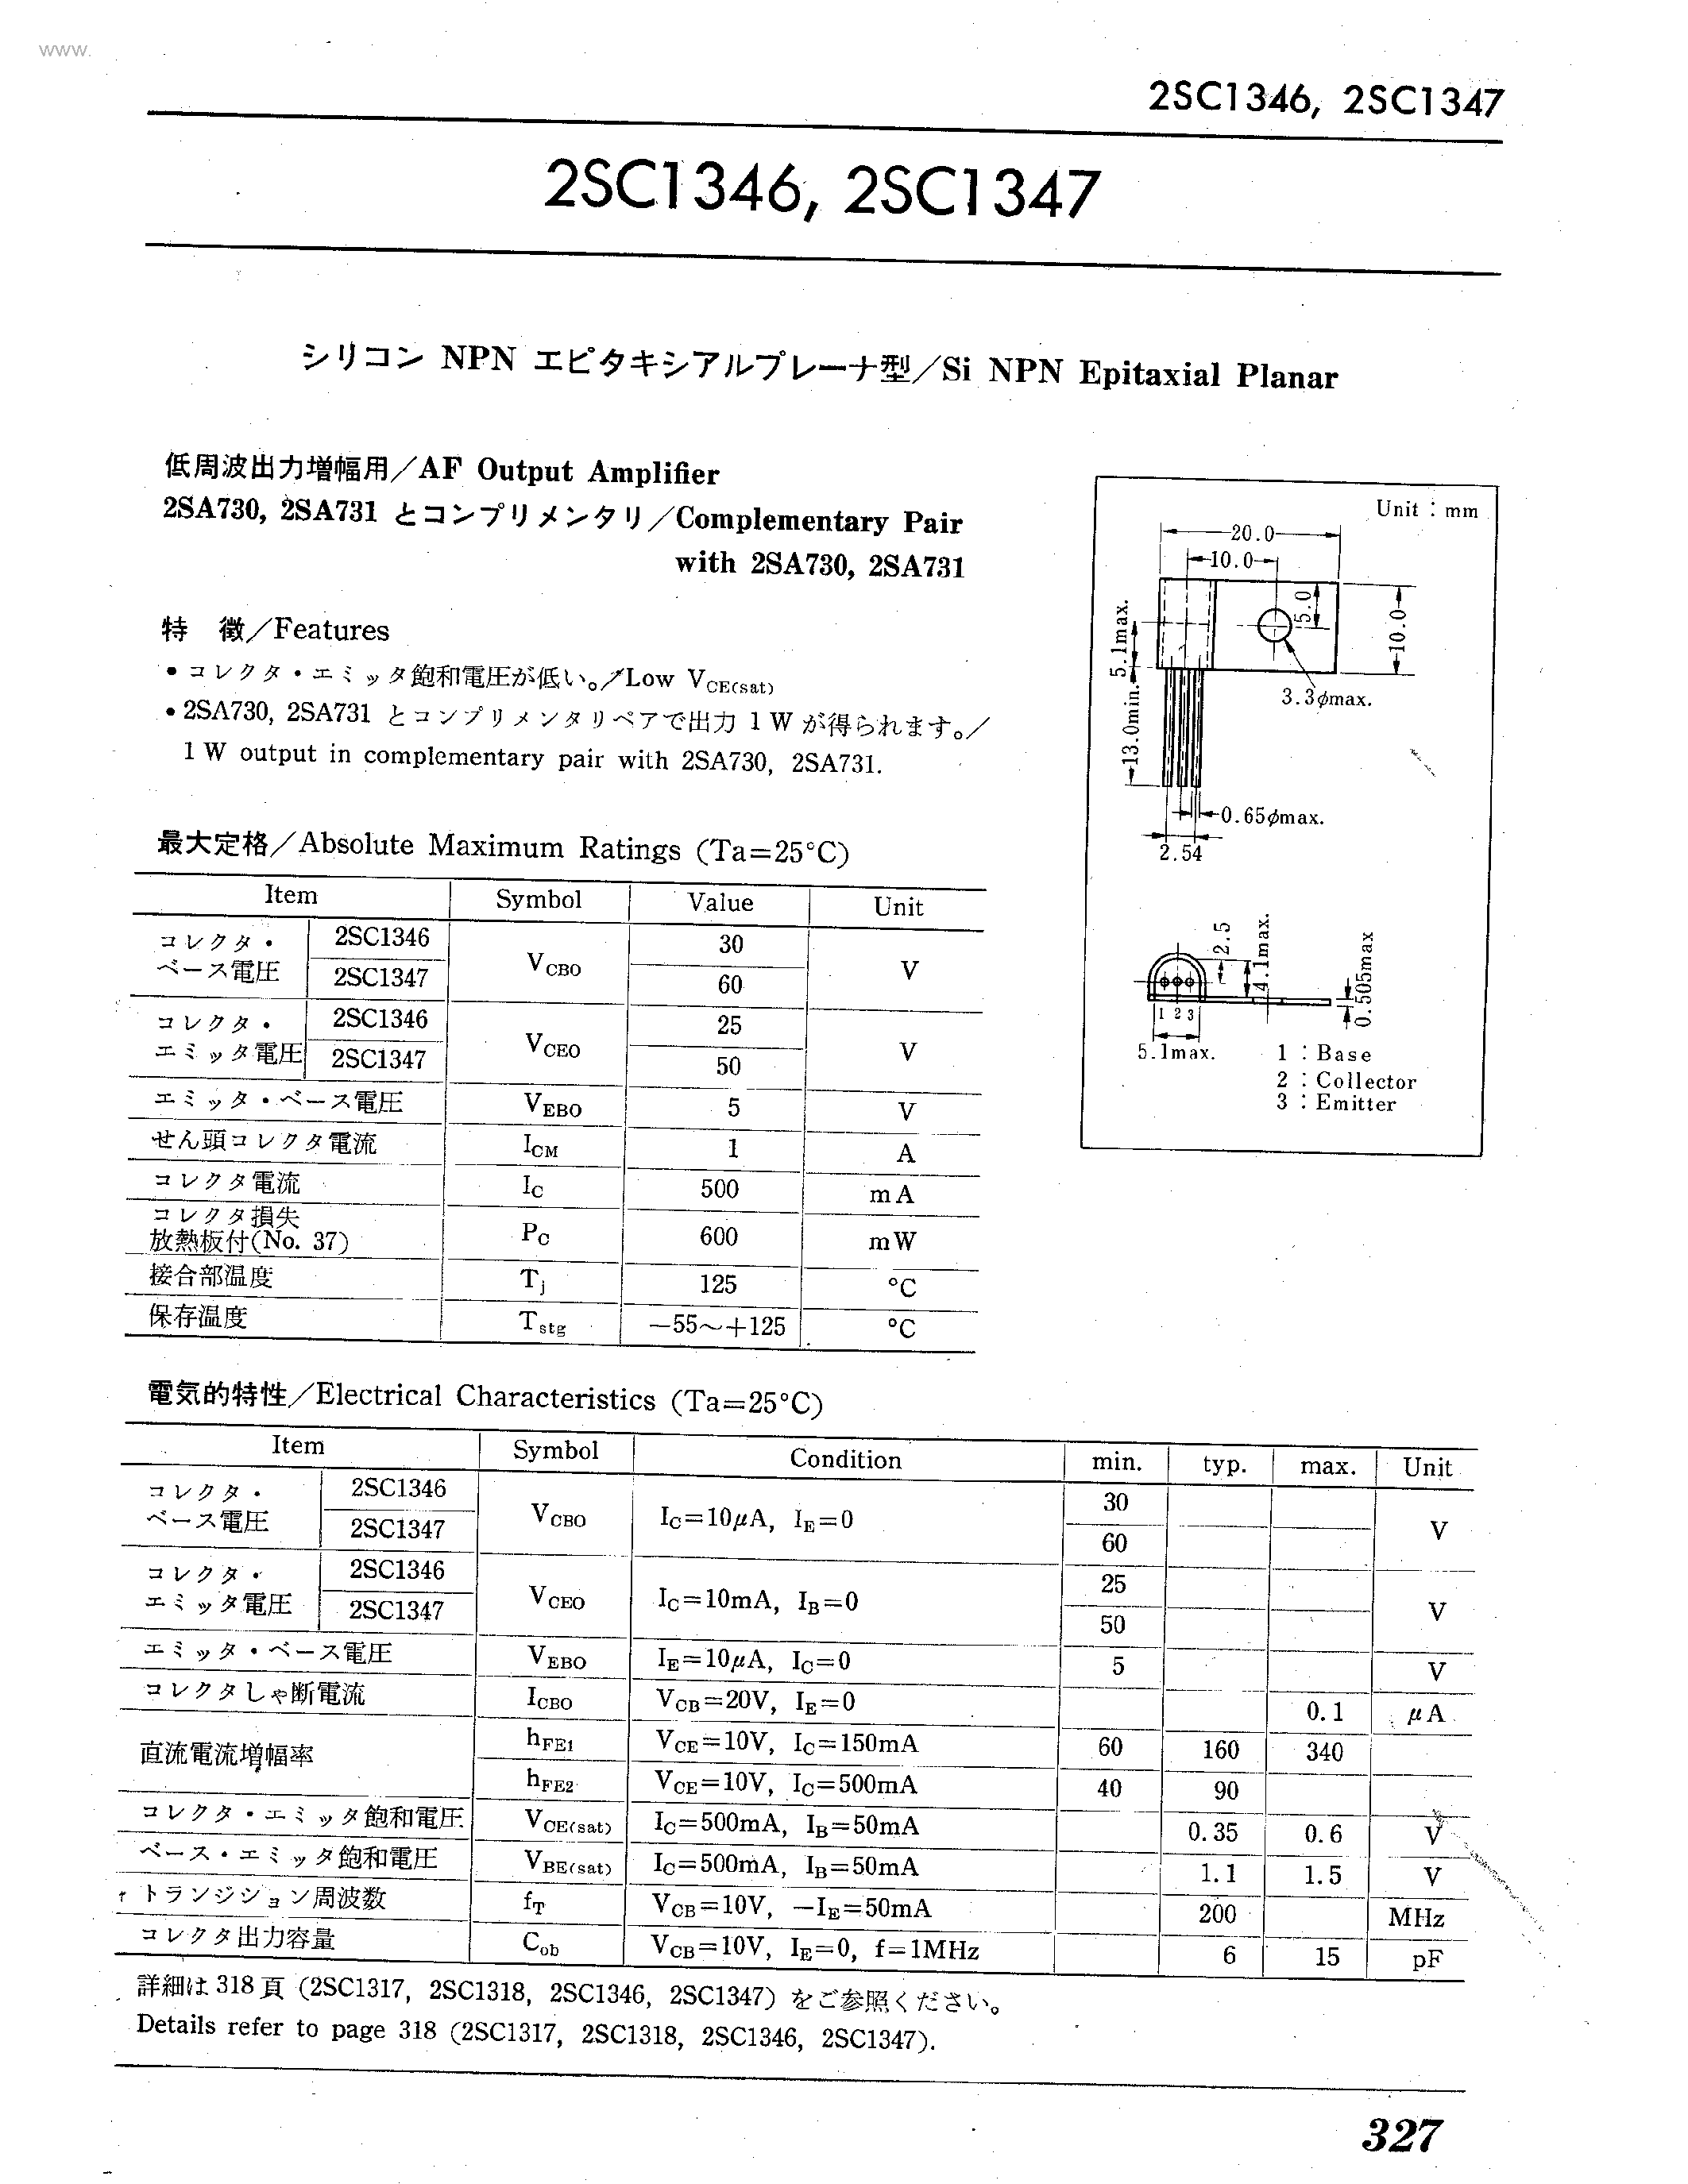 Datasheet 2SC1346 - (2SC1346 / 2SC1347) Si NPN Epitaxial Planar AF Output Amplifier page 1